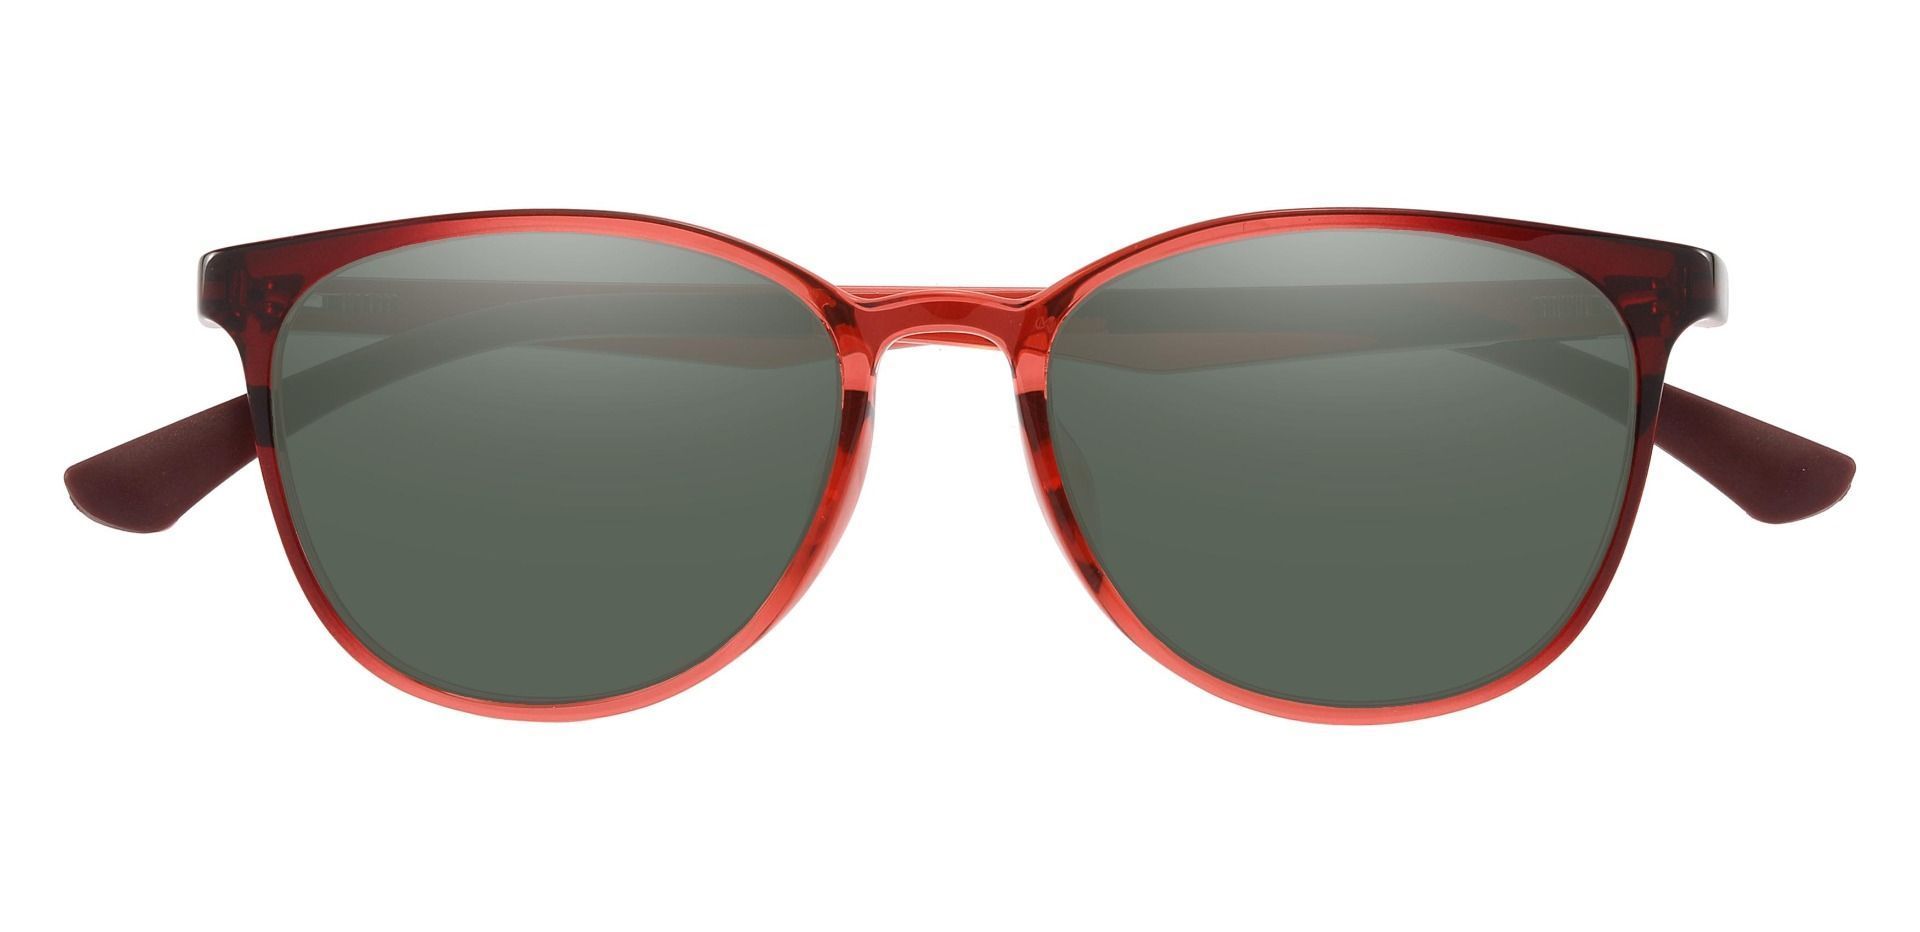 Pembroke Oval Prescription Sunglasses - Pink Frame With Green Lenses